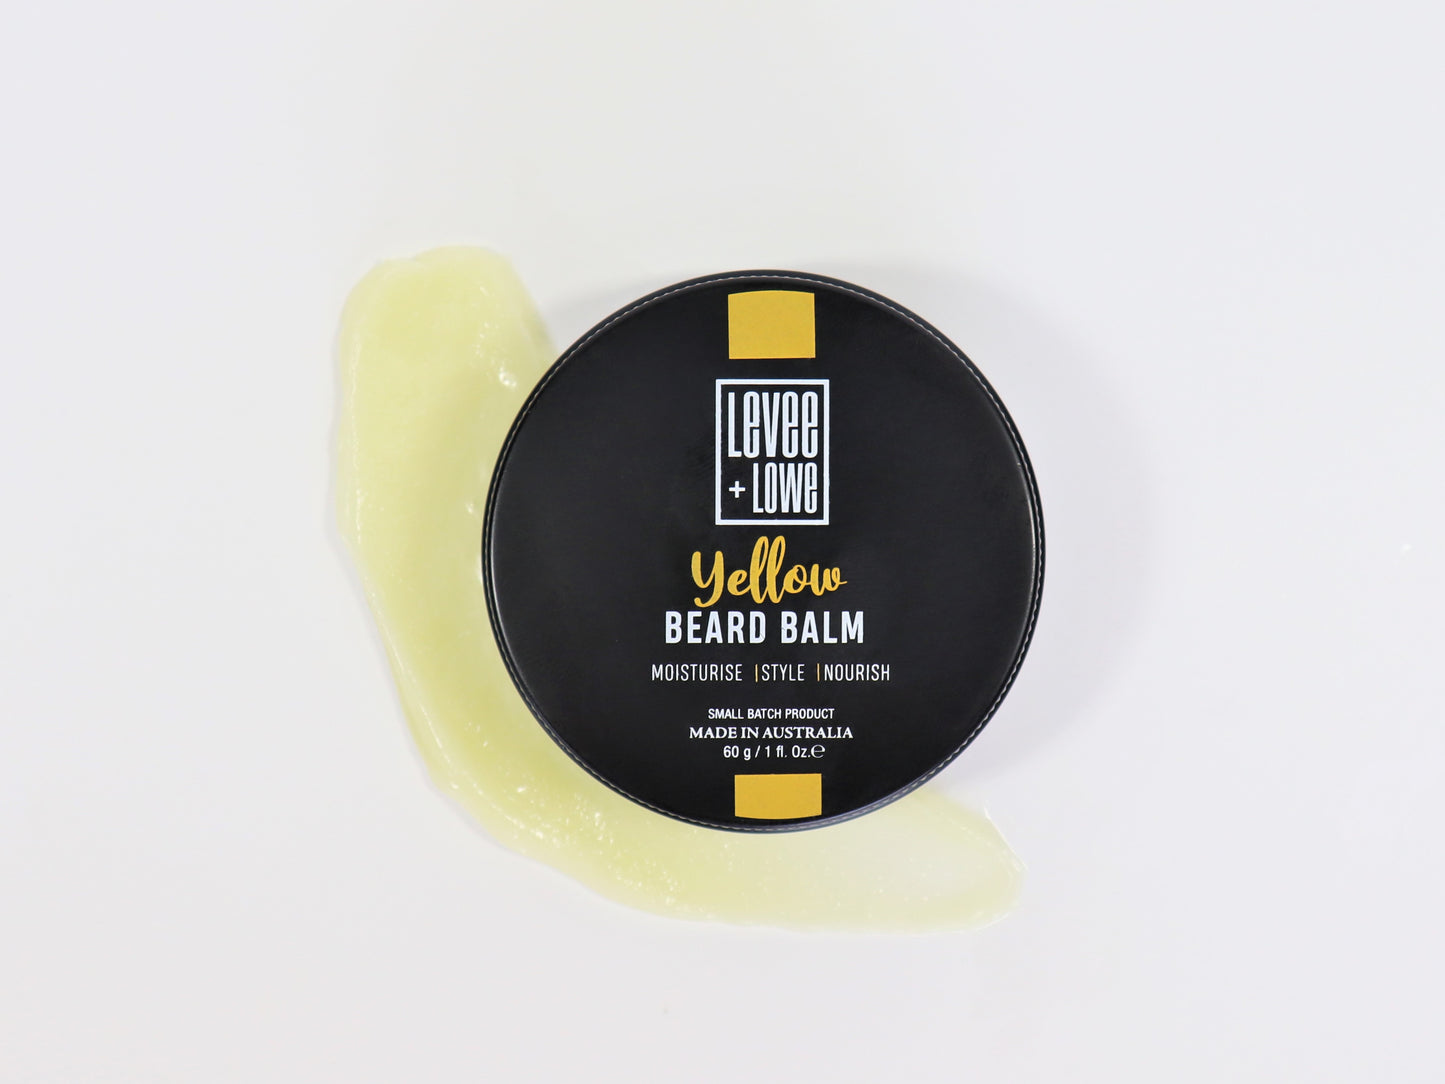 Beard Balm 60g | YELLOW - Zesty Lemon